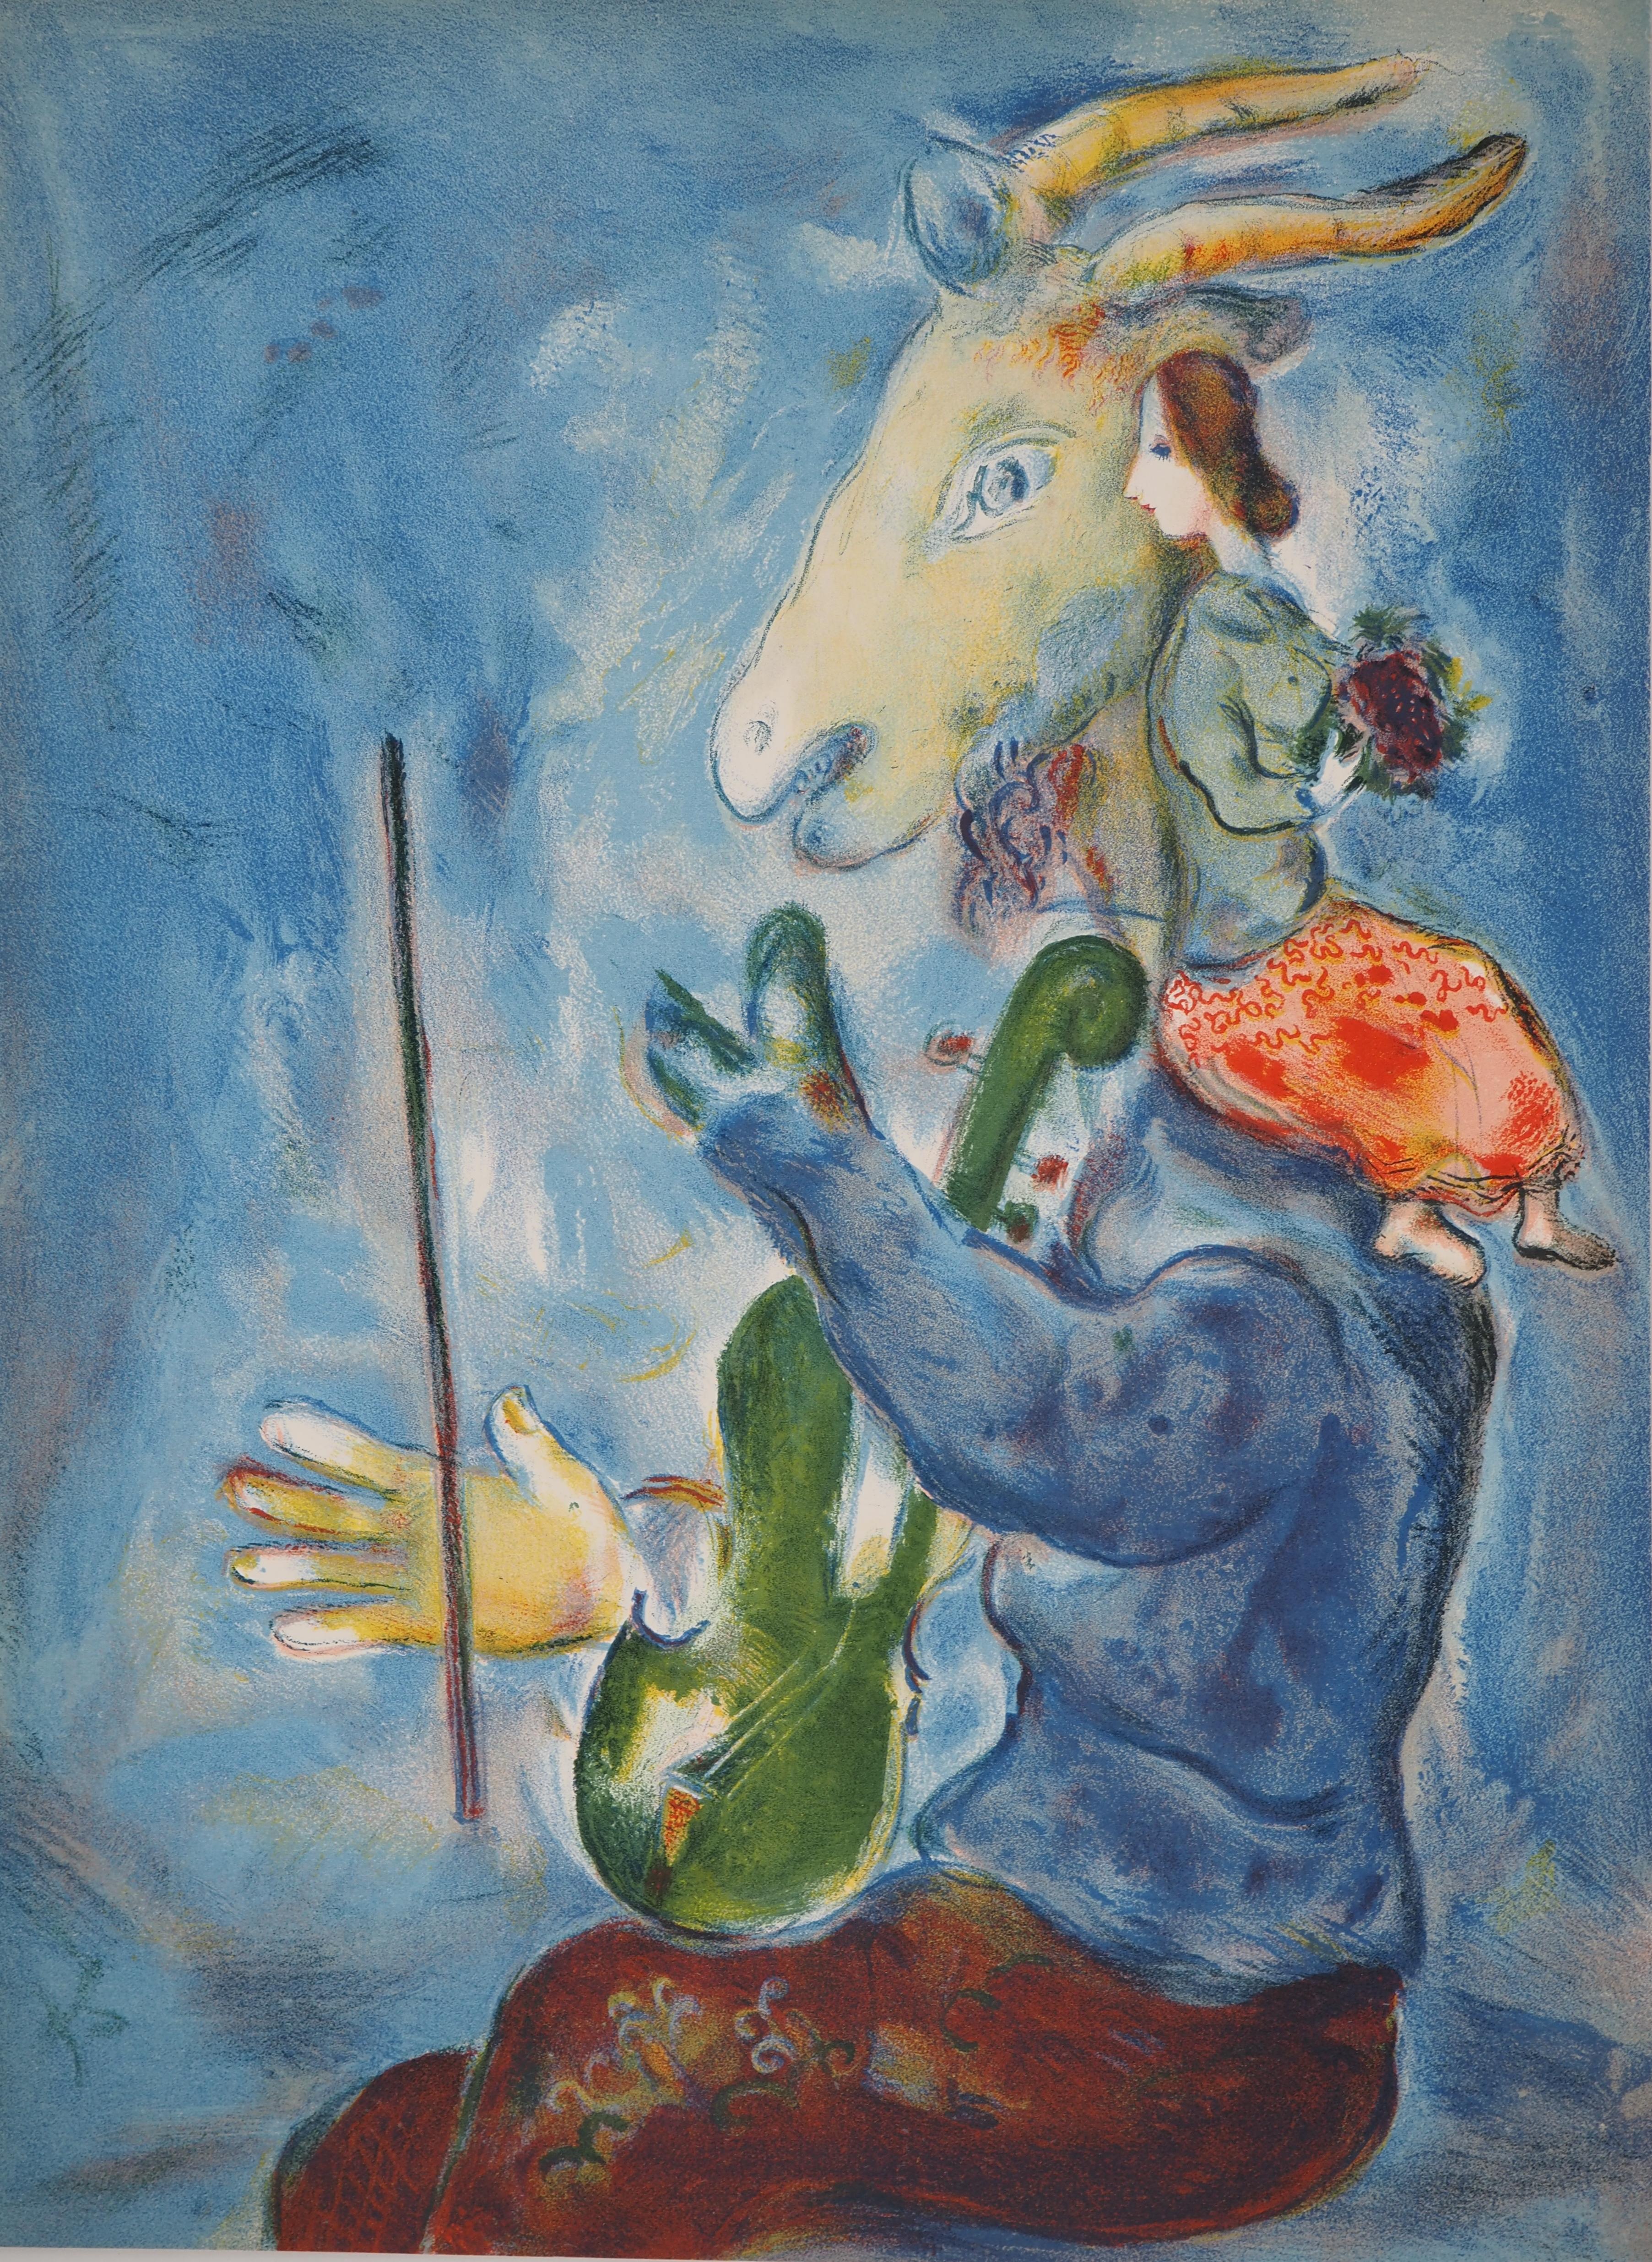 When was Marc Chagall born?